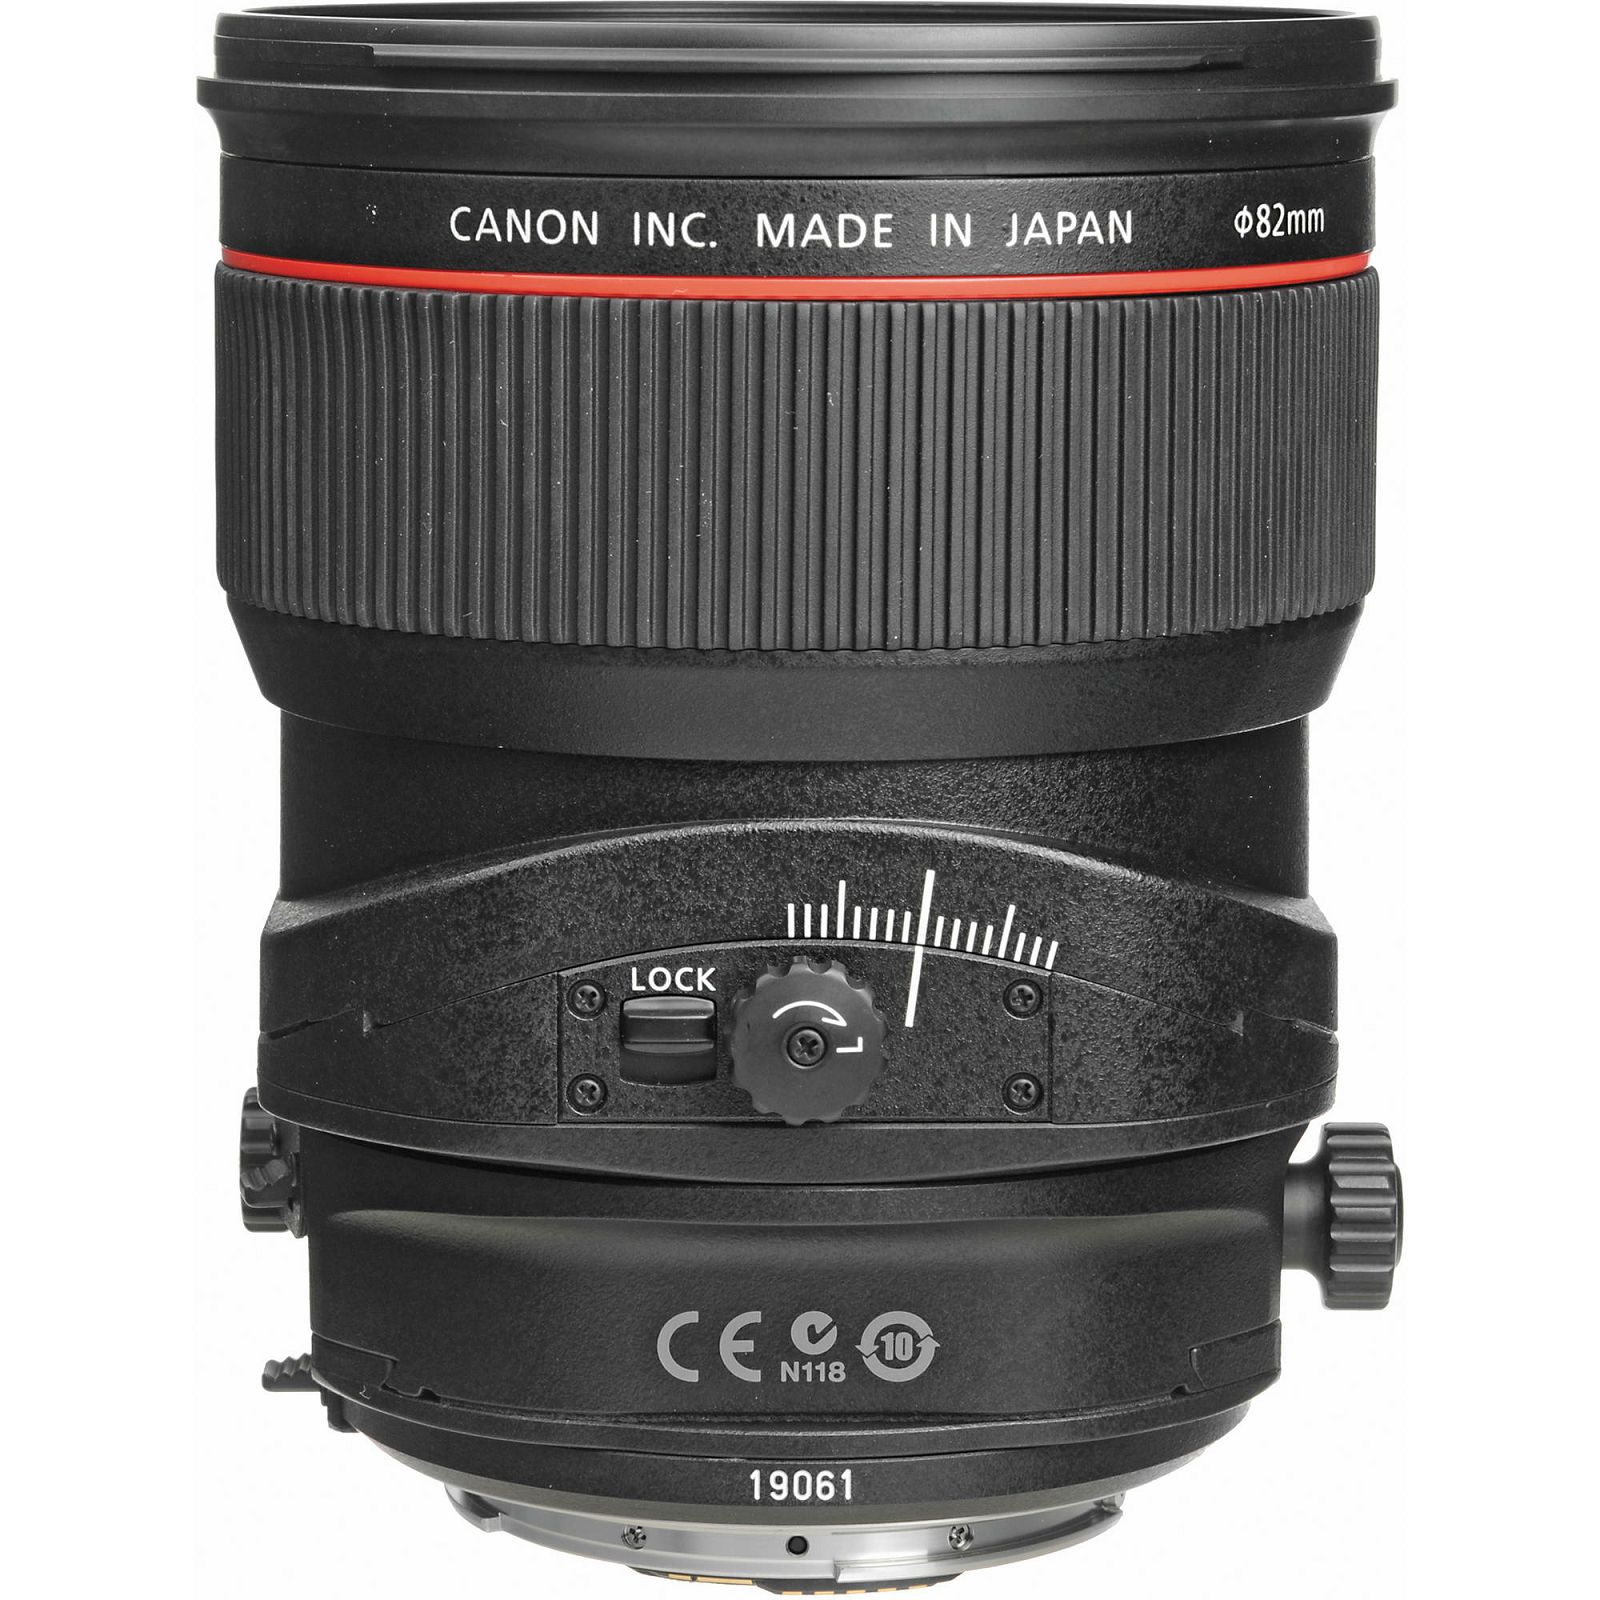 Canon TS-E 24mm f/3.5L II tilt-shift objektiv lens TS 24 F3.5 3.5 F/3.5 1:3,5 f/3.5 L 1:3,5LII (3552B005AA)